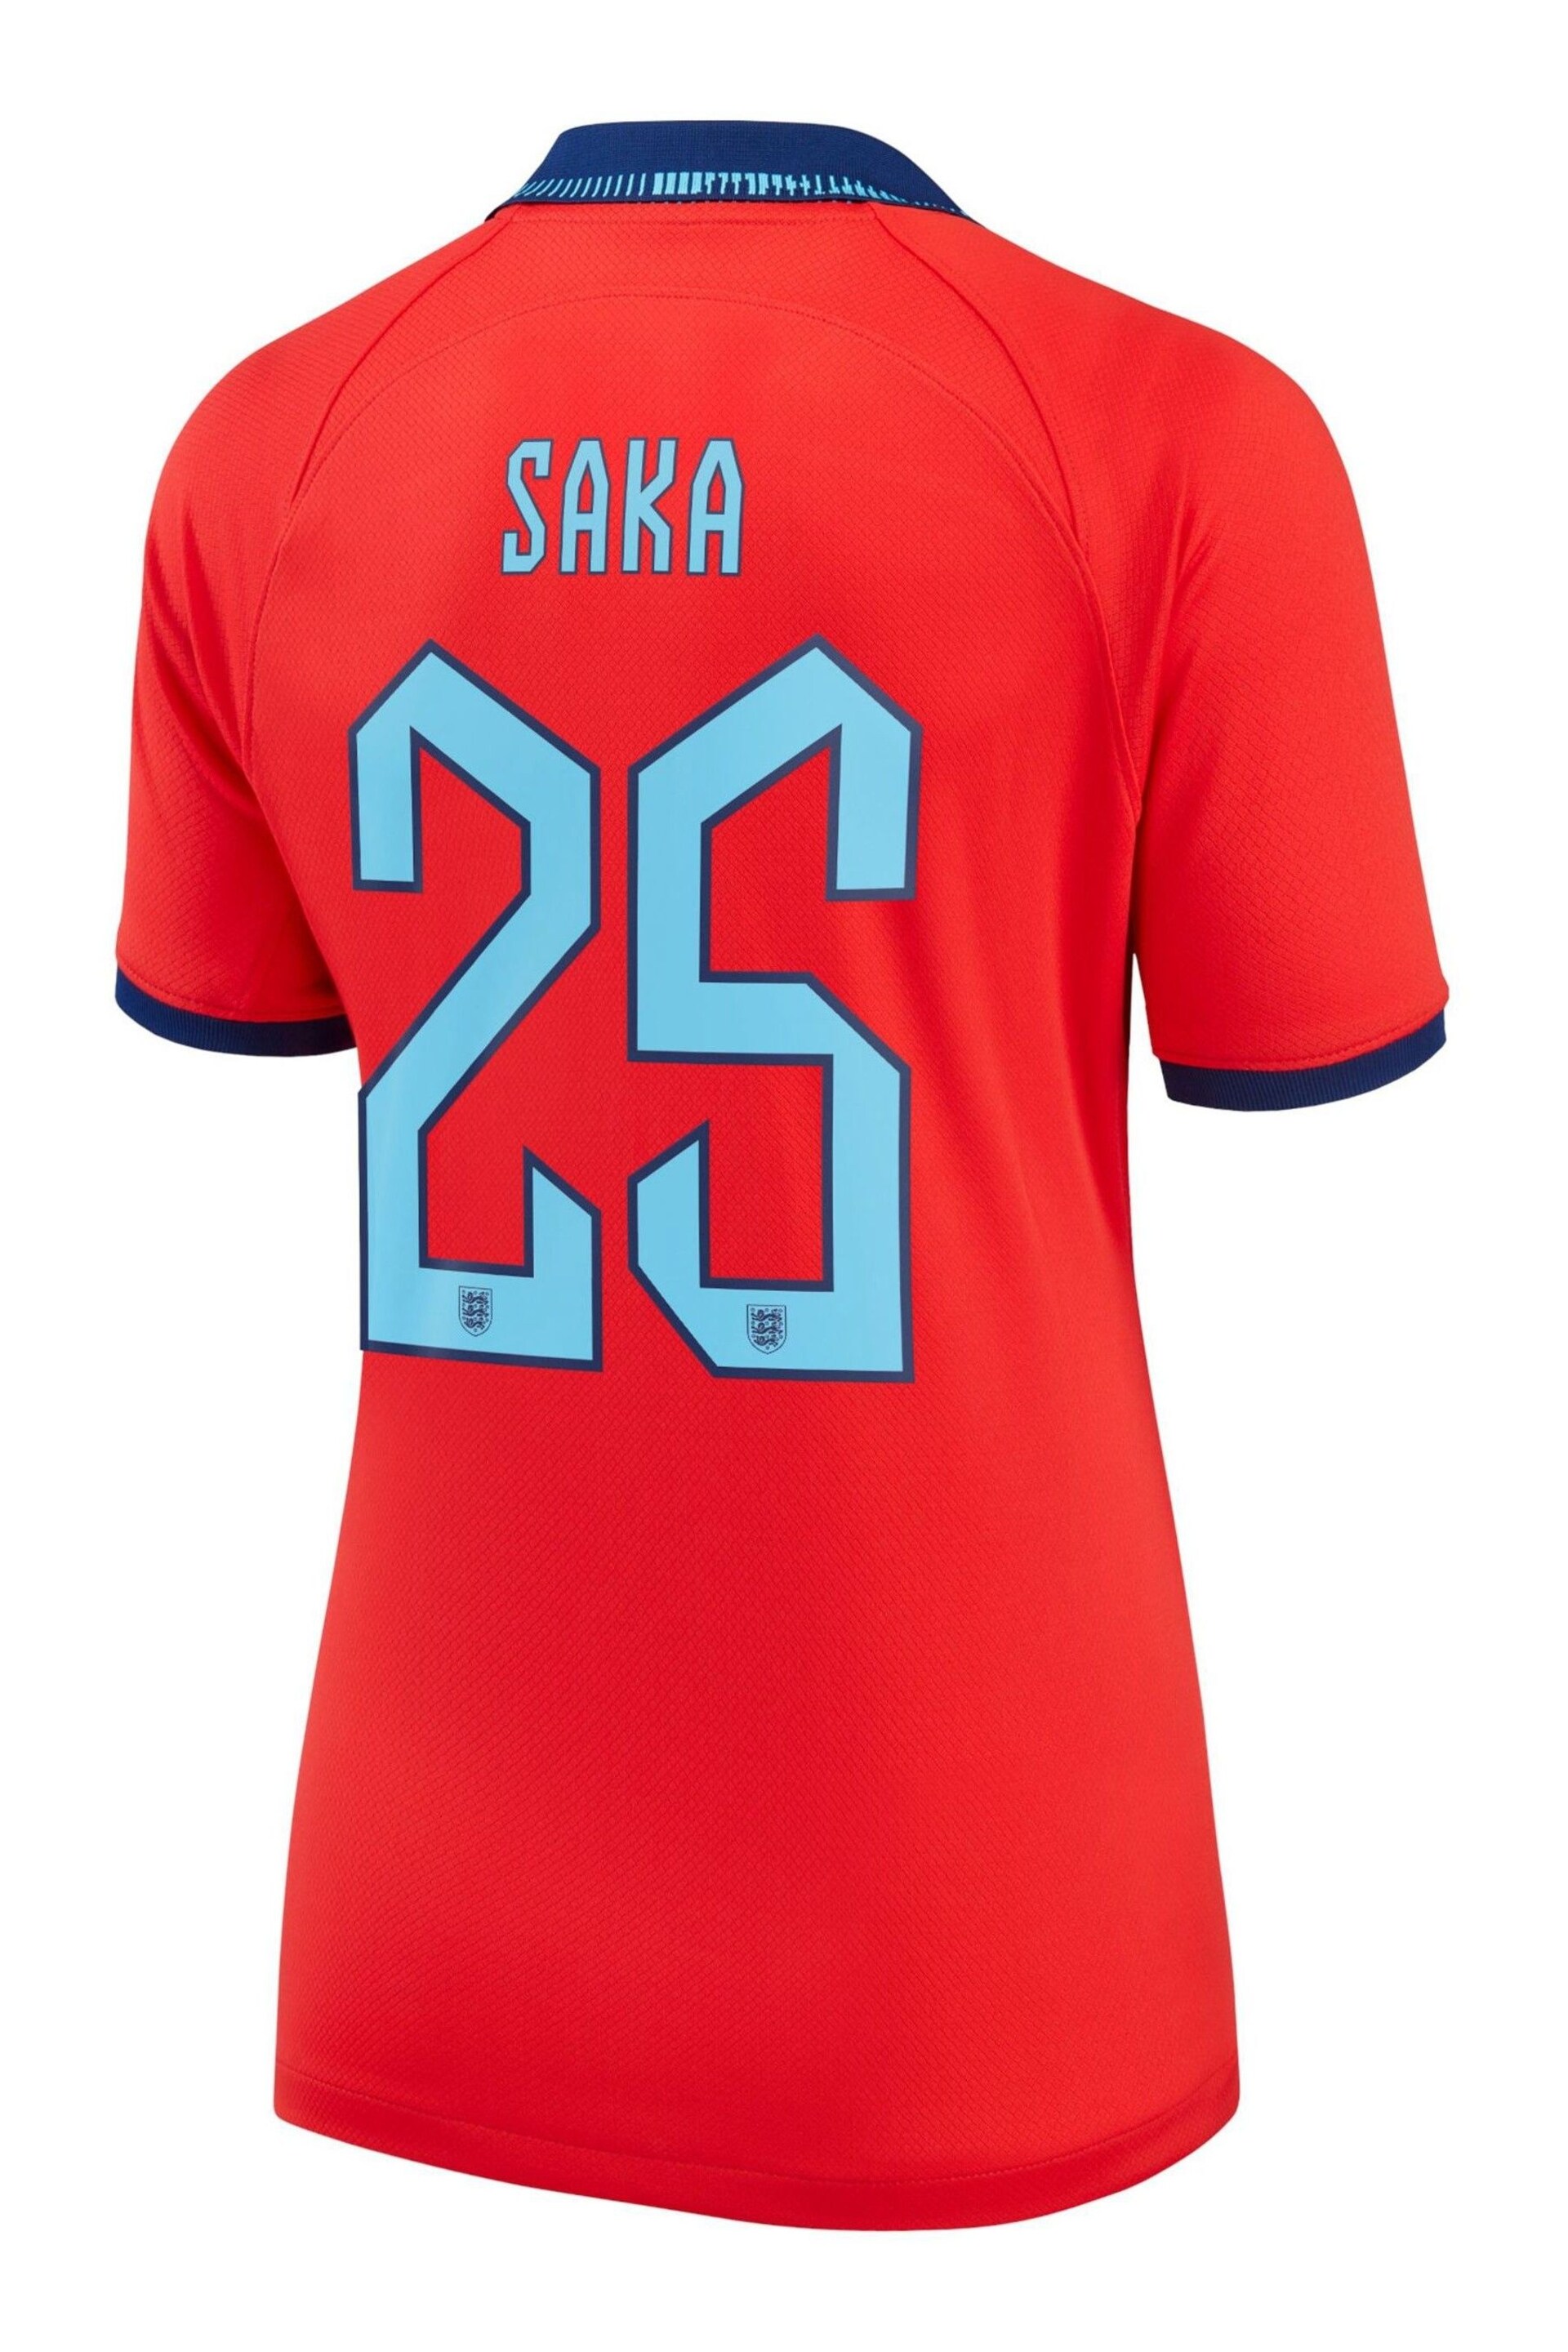 Nike Red Saka - 25 England Womens Away Stadium Football Shirt 2022 Womens - Image 3 of 3